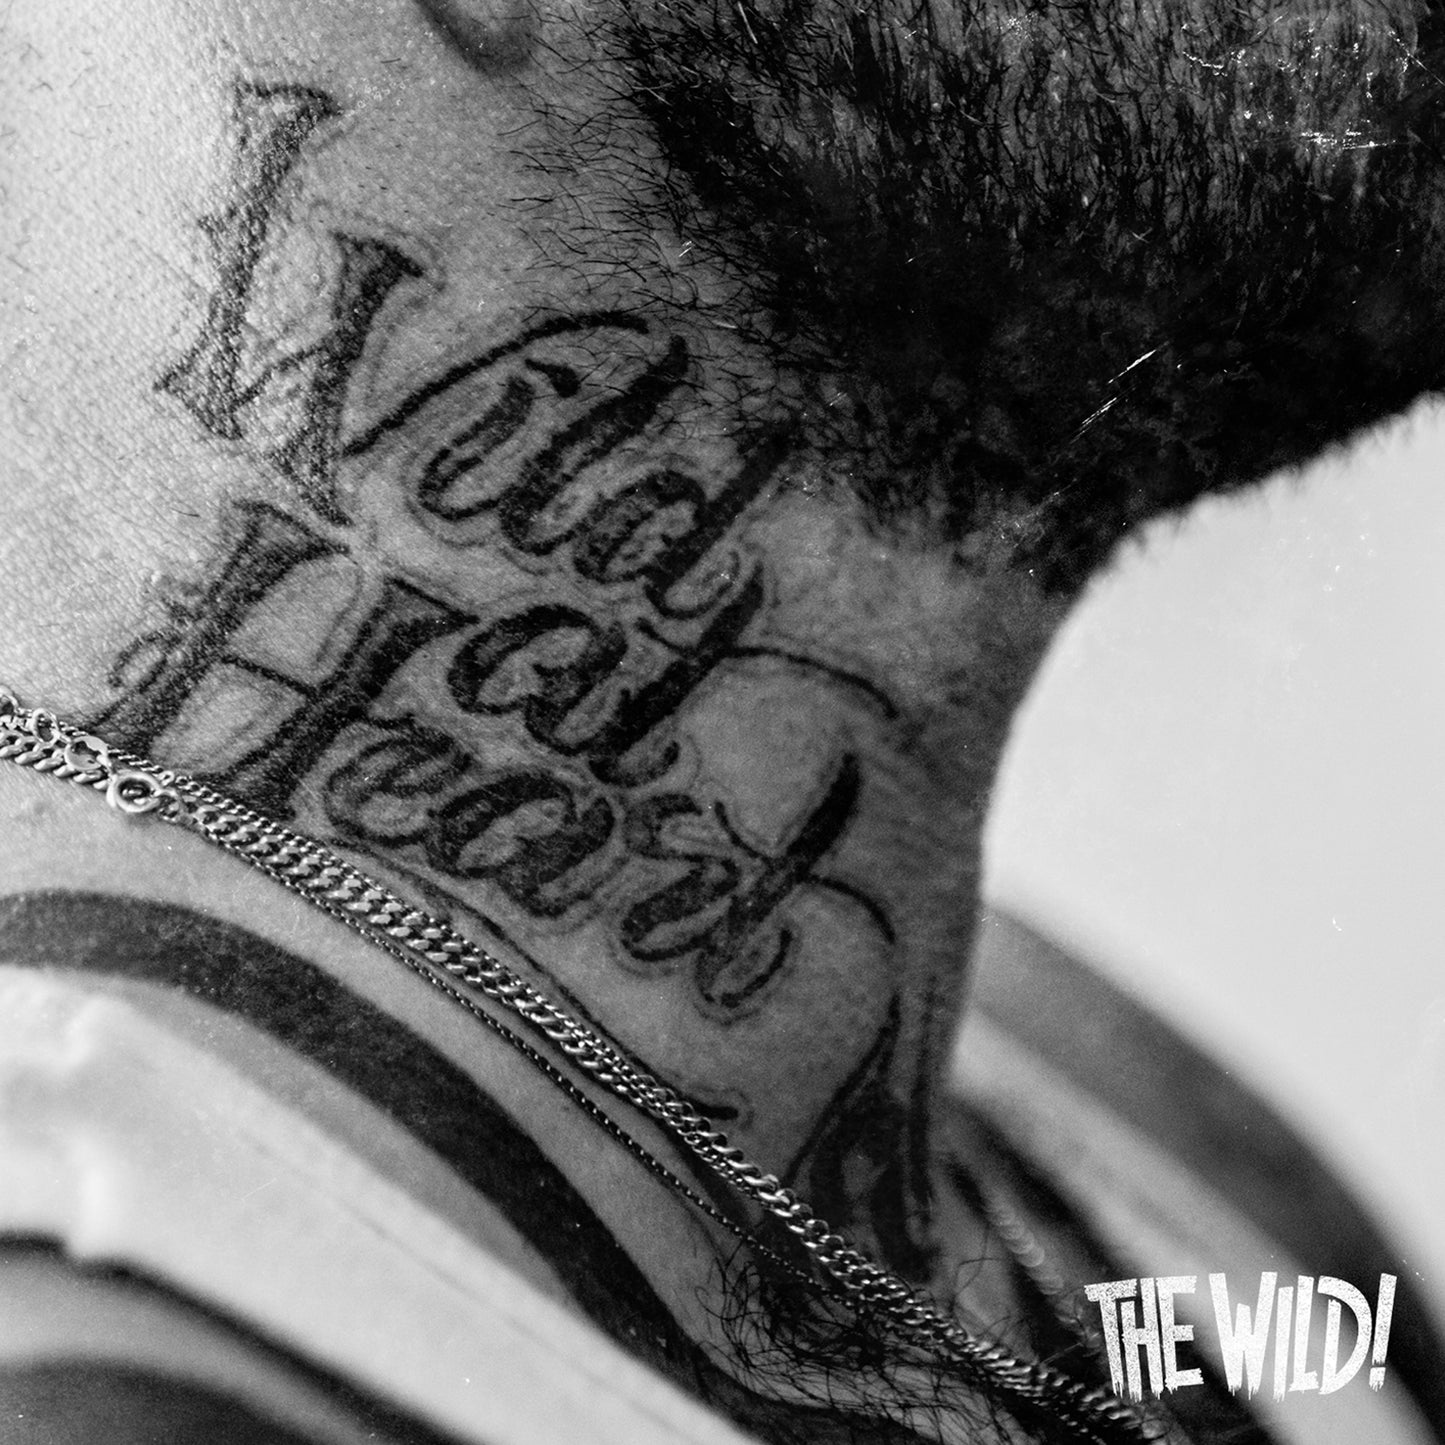 The Wild! "Wild At Heart" CD